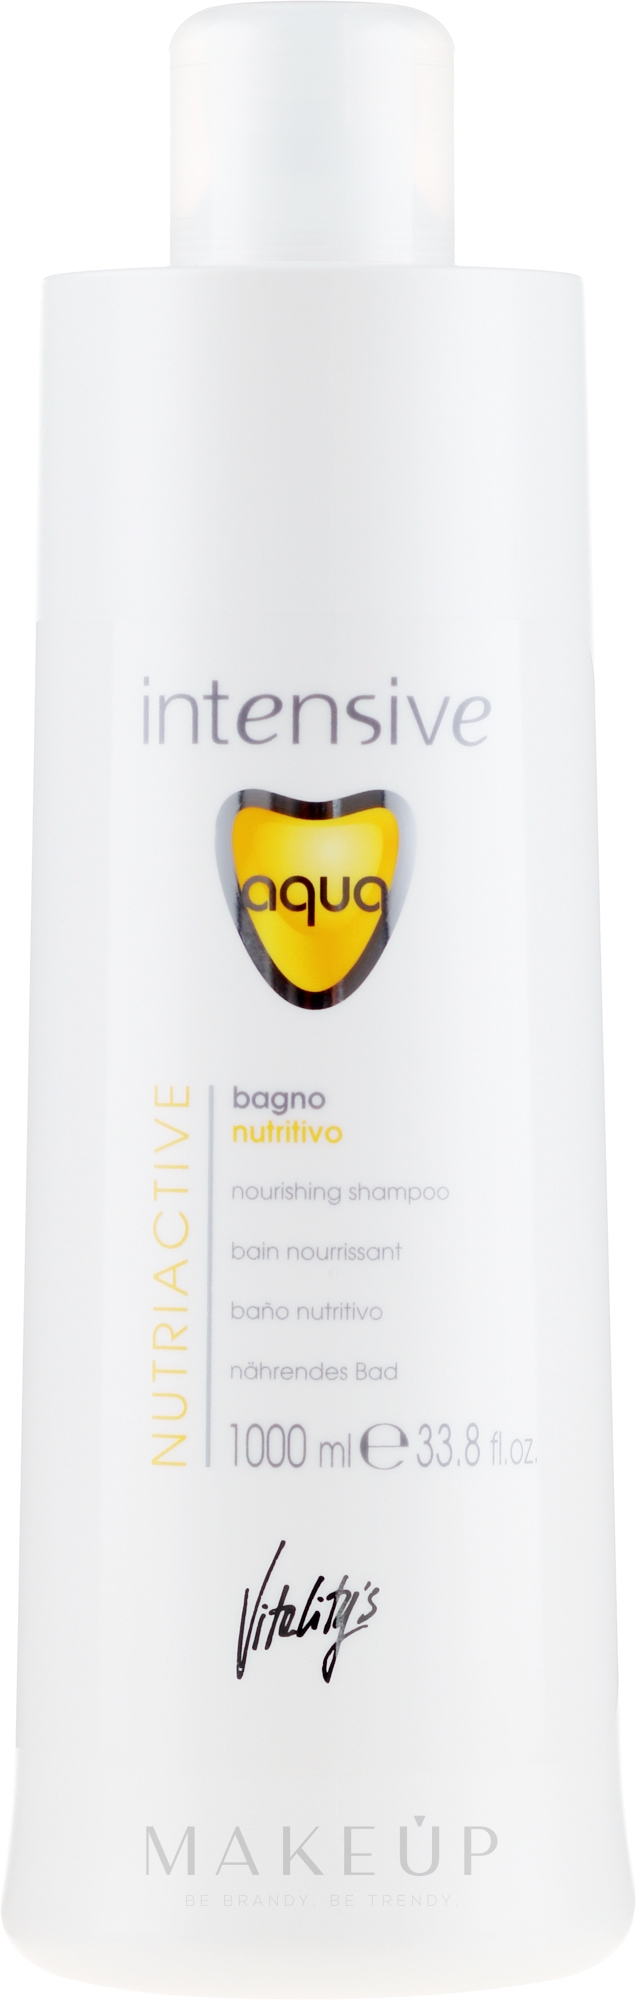 Pflegendes Shampoo für trockenes Haar - Vitality's Intensive Aqua Nourishing Shampoo — Bild 1000 ml